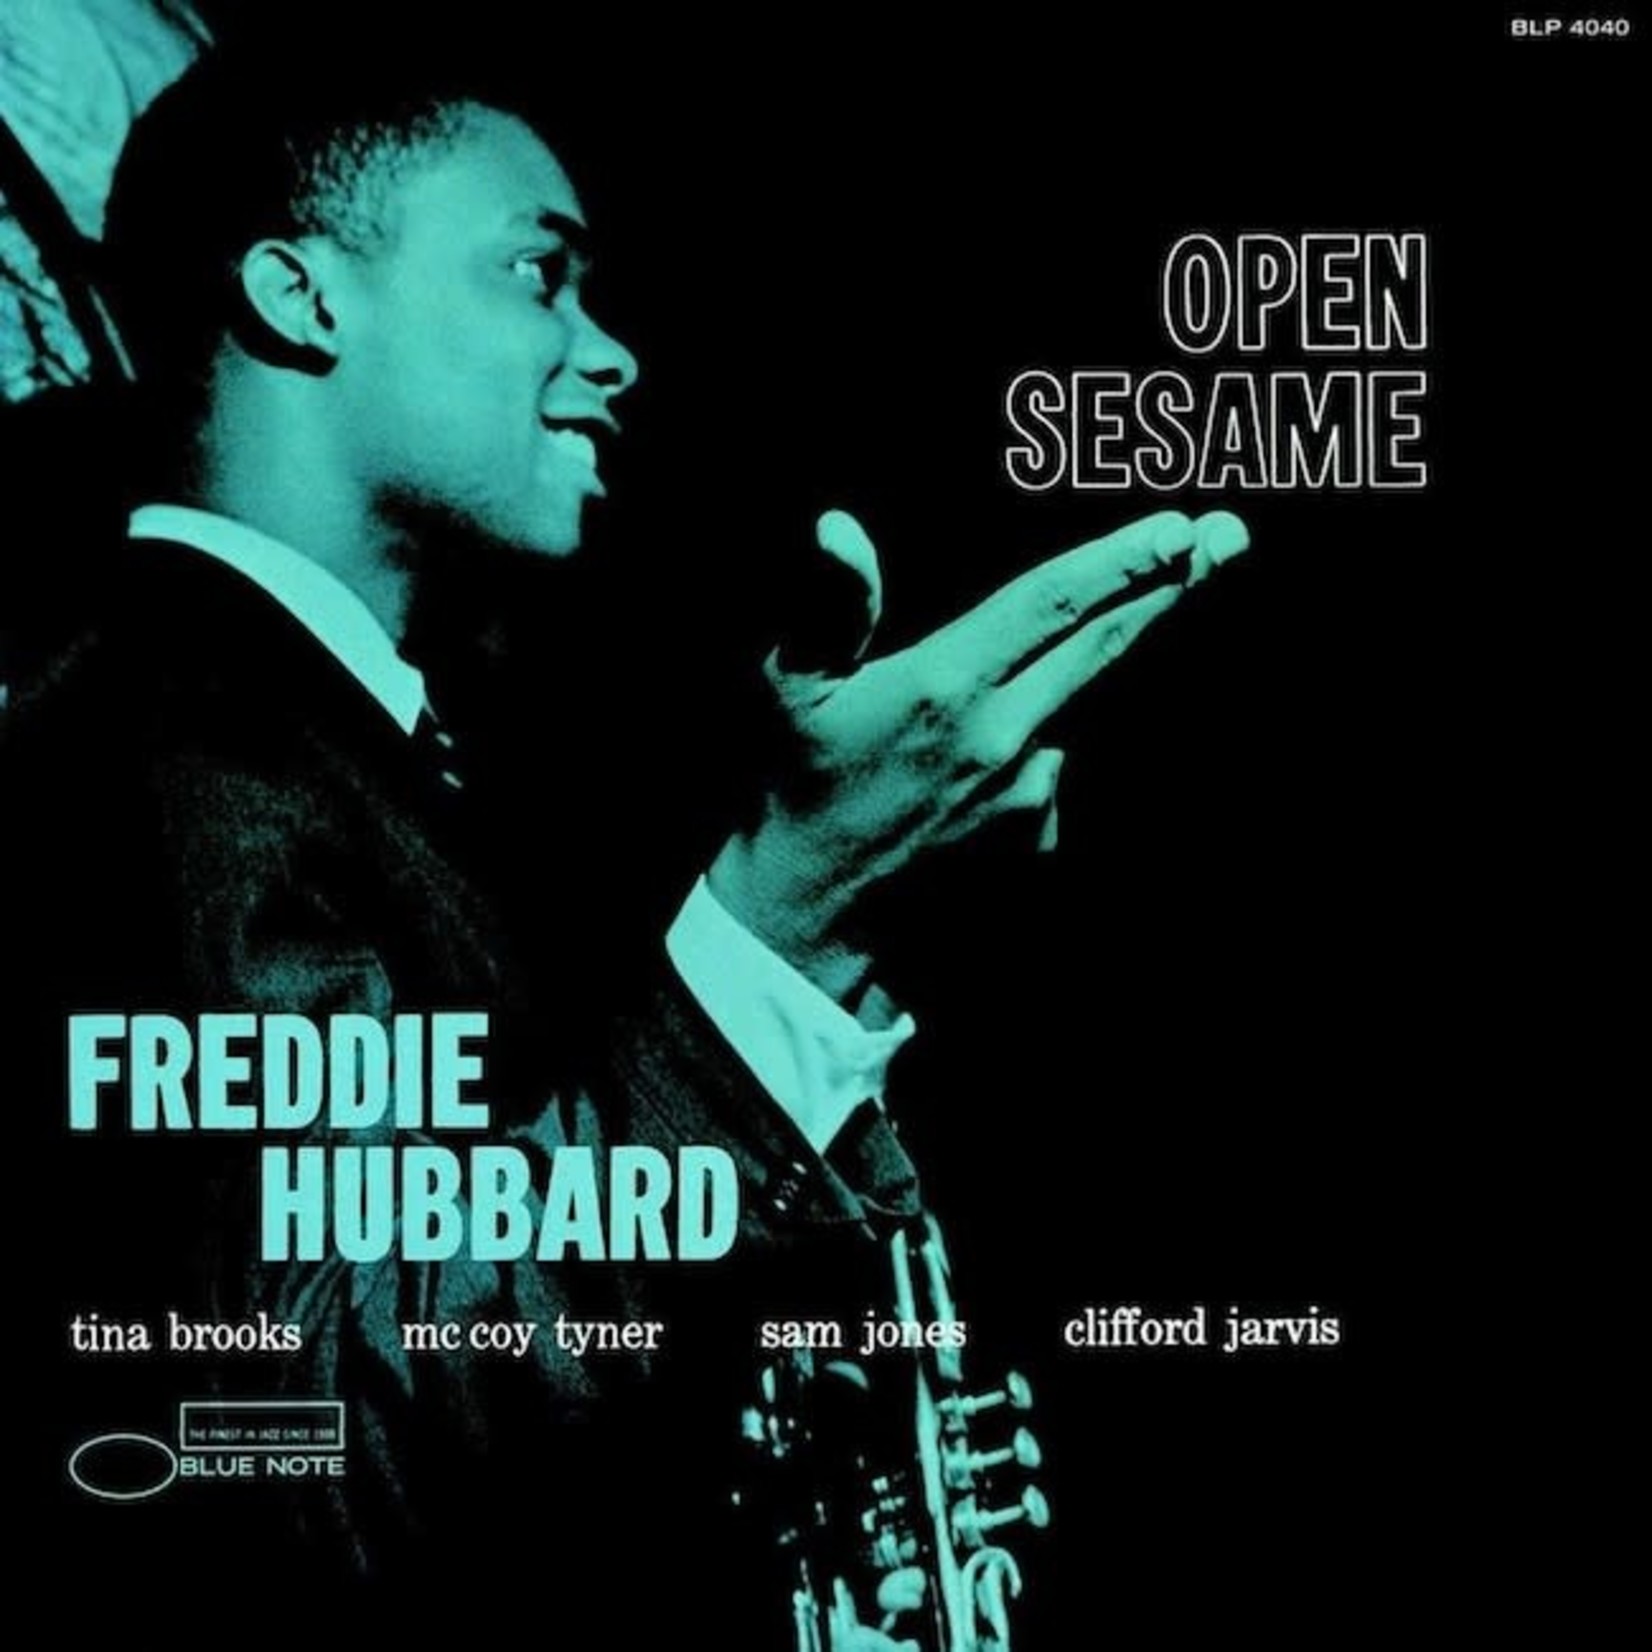 [New] Freddie Hubbard - Open Sesame (Blue Note 80 Series)